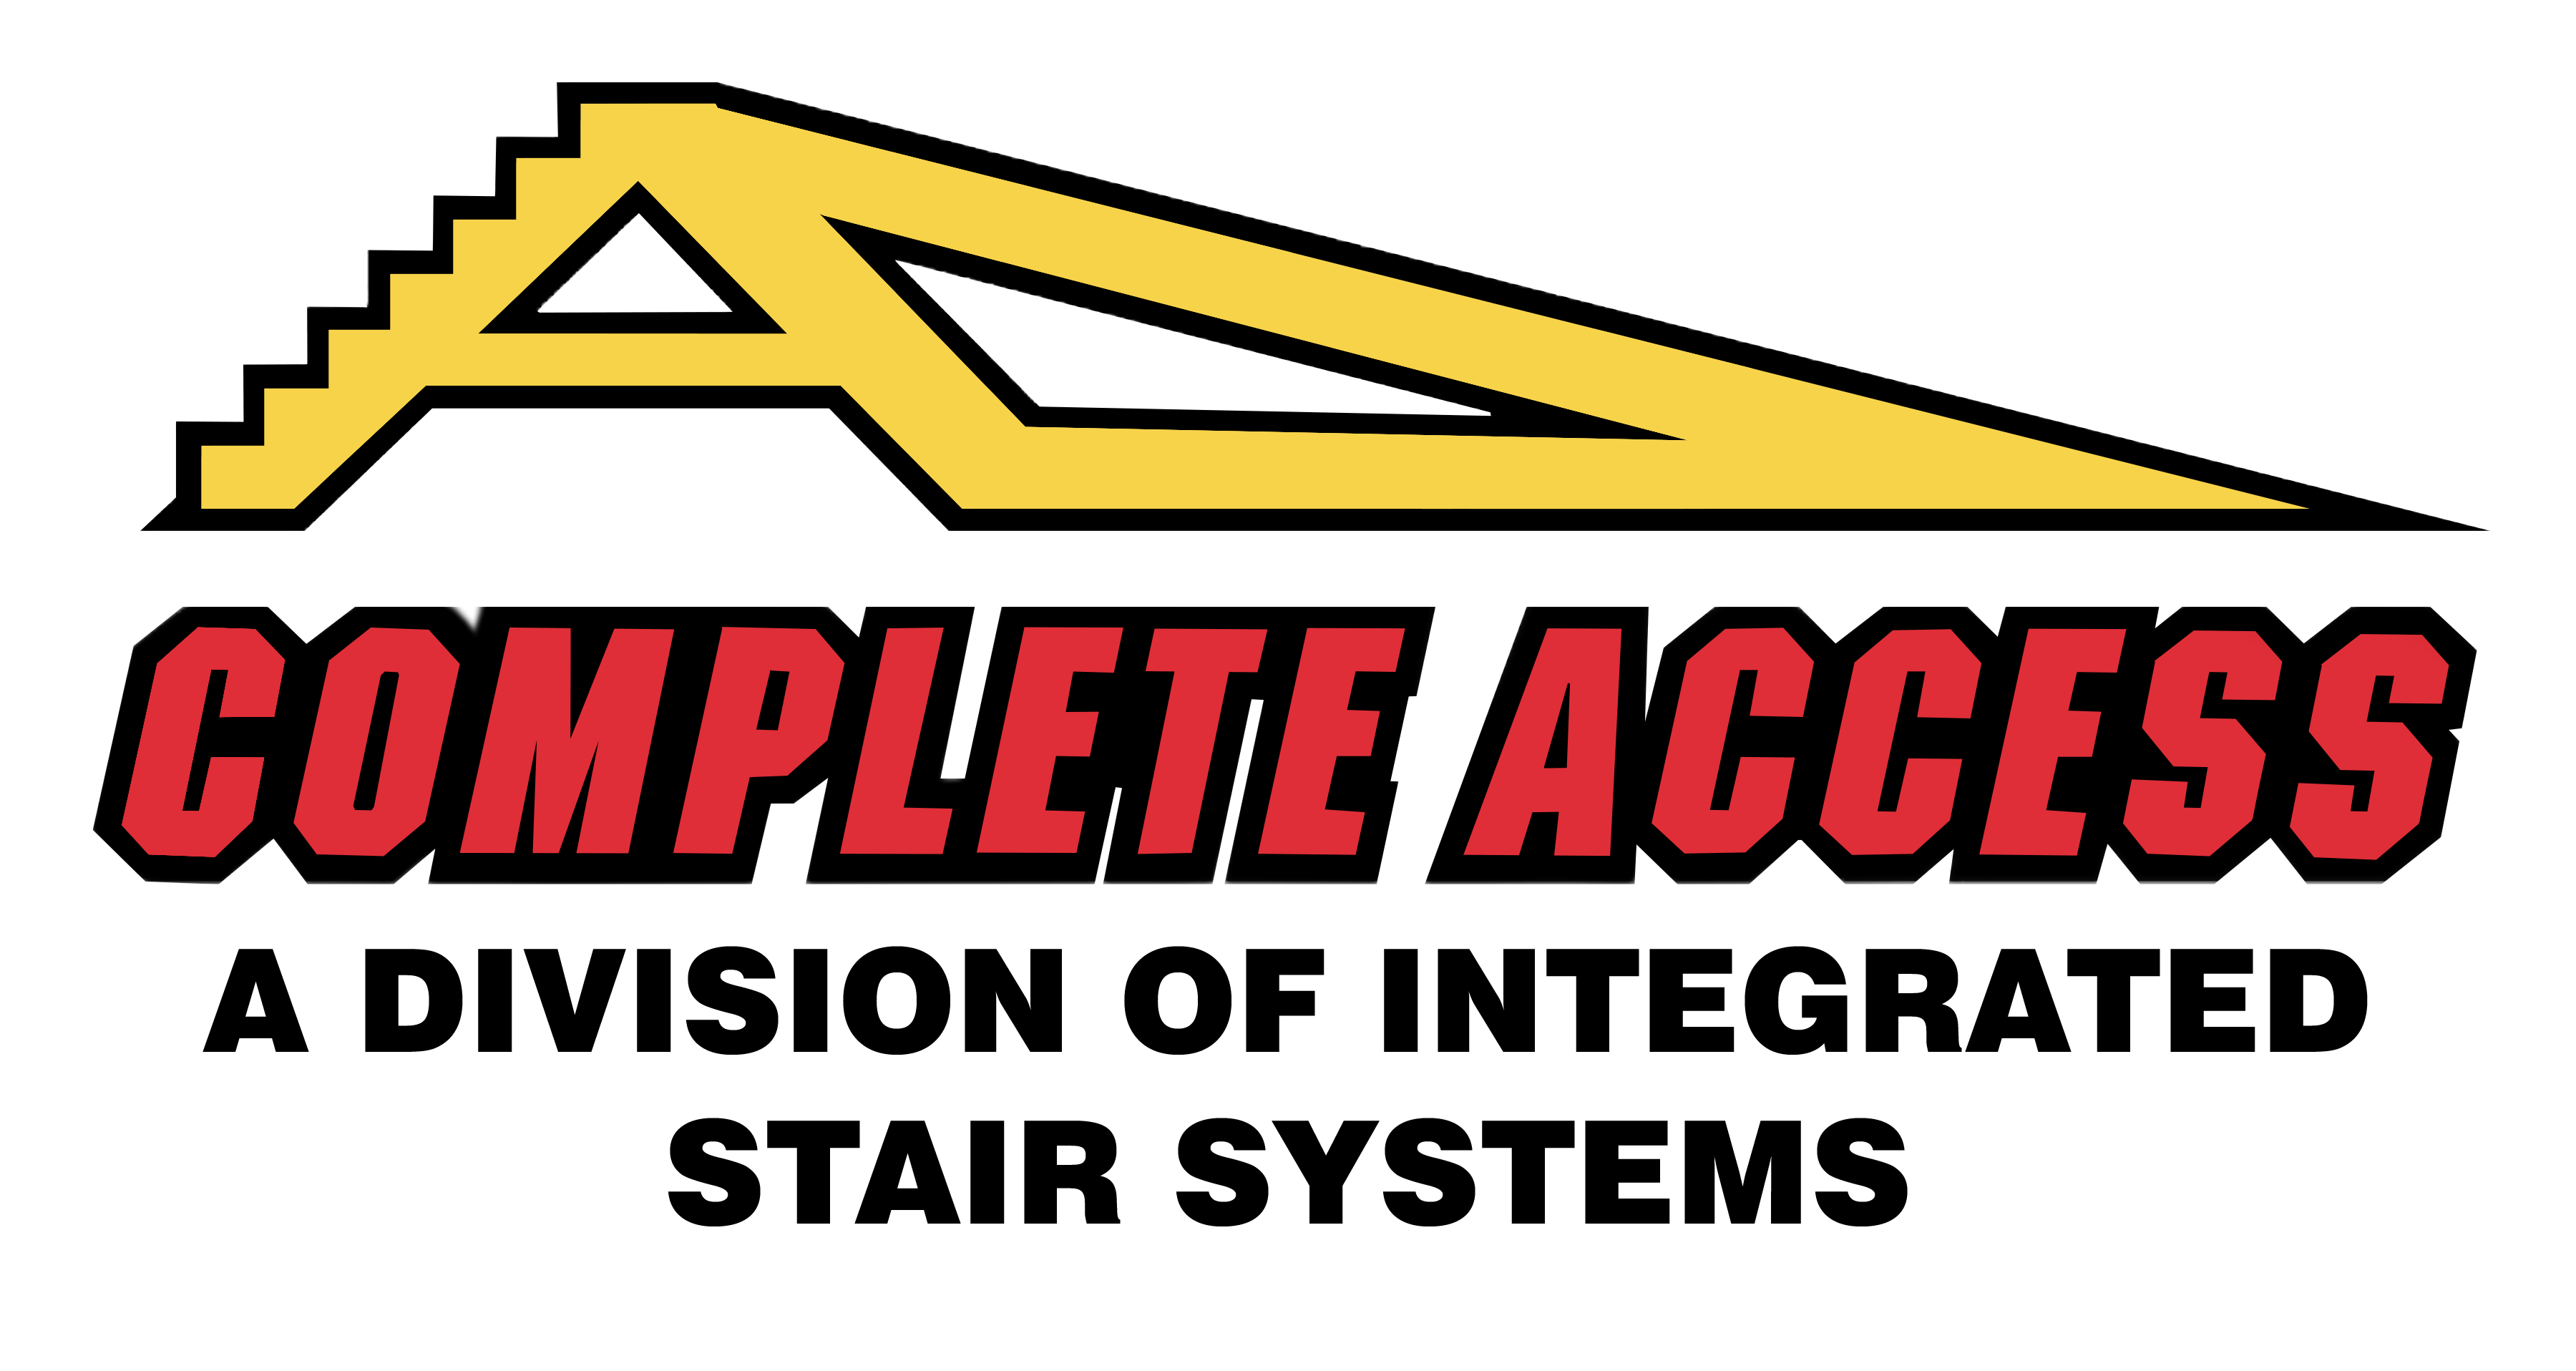 Big Complete Access website